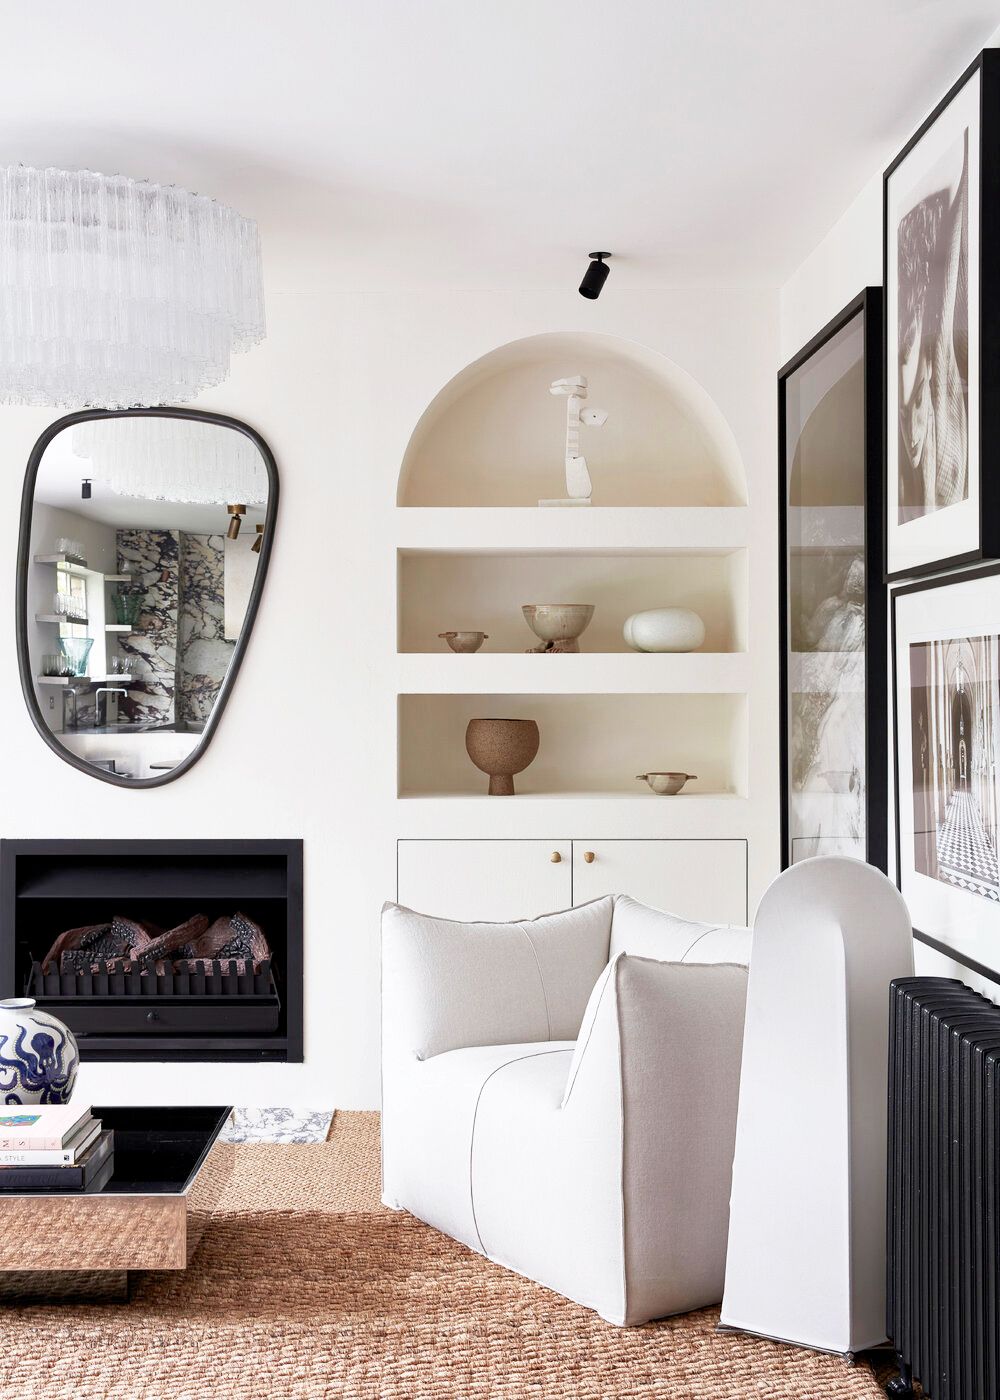 15 Stylish Living Room Lighting Ideas - Well-Lit Living Room Tips